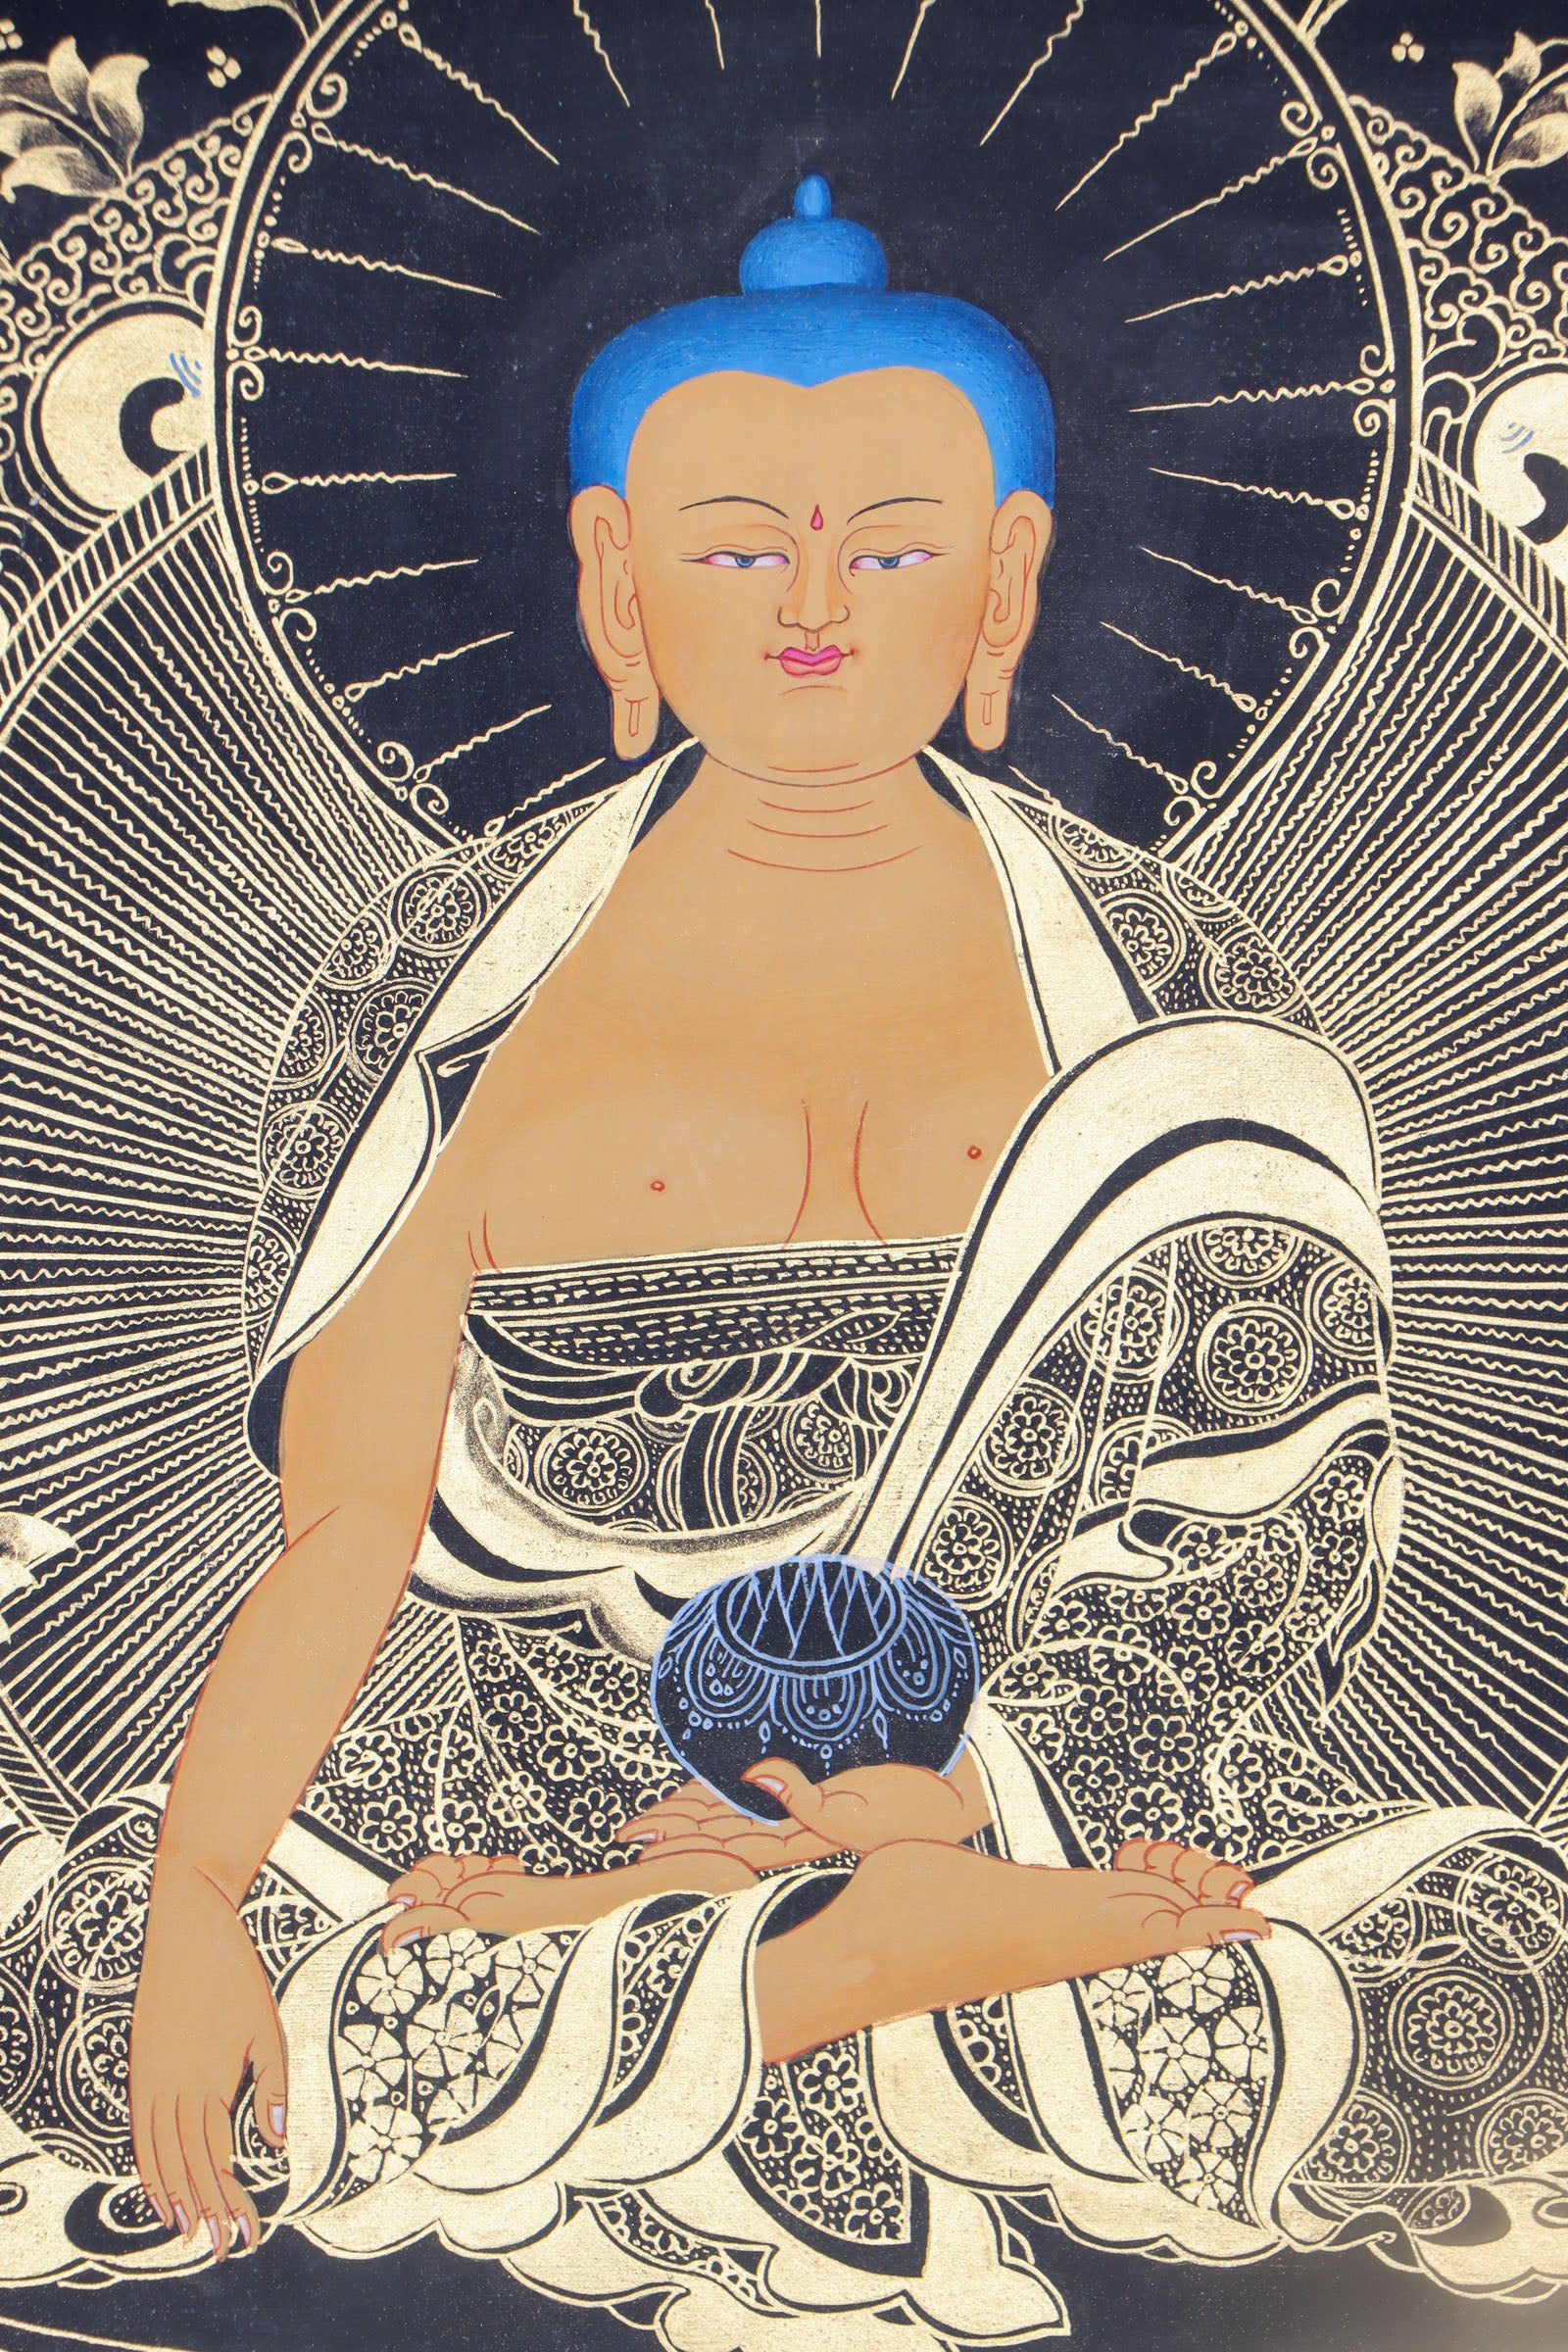 Shakyamuni Buddha Thangka Painting for enlightment.